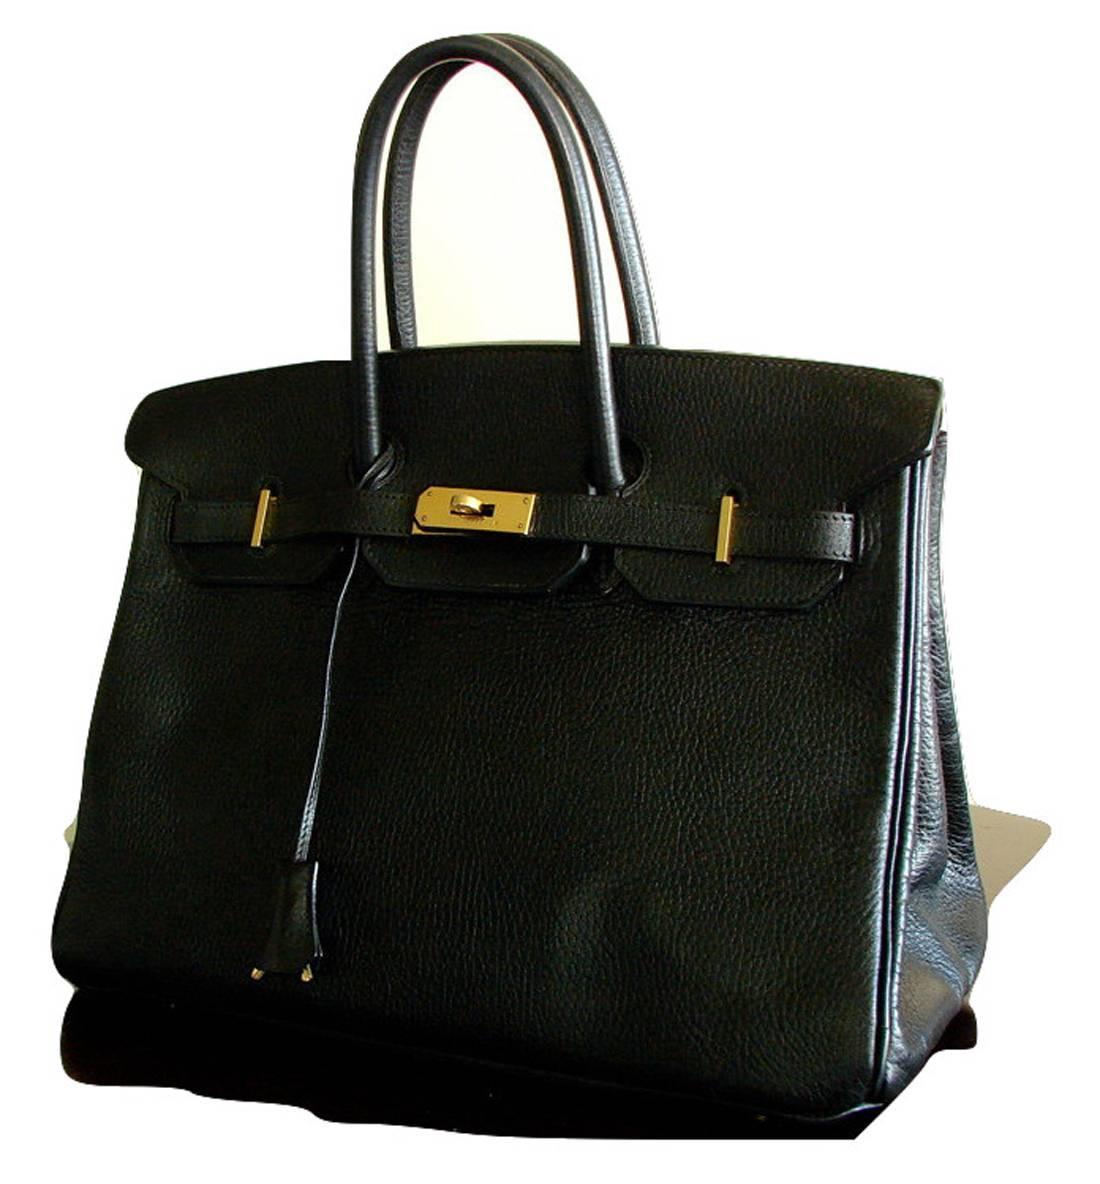 Hermes Paris Handbags | SEMA Data Co-op